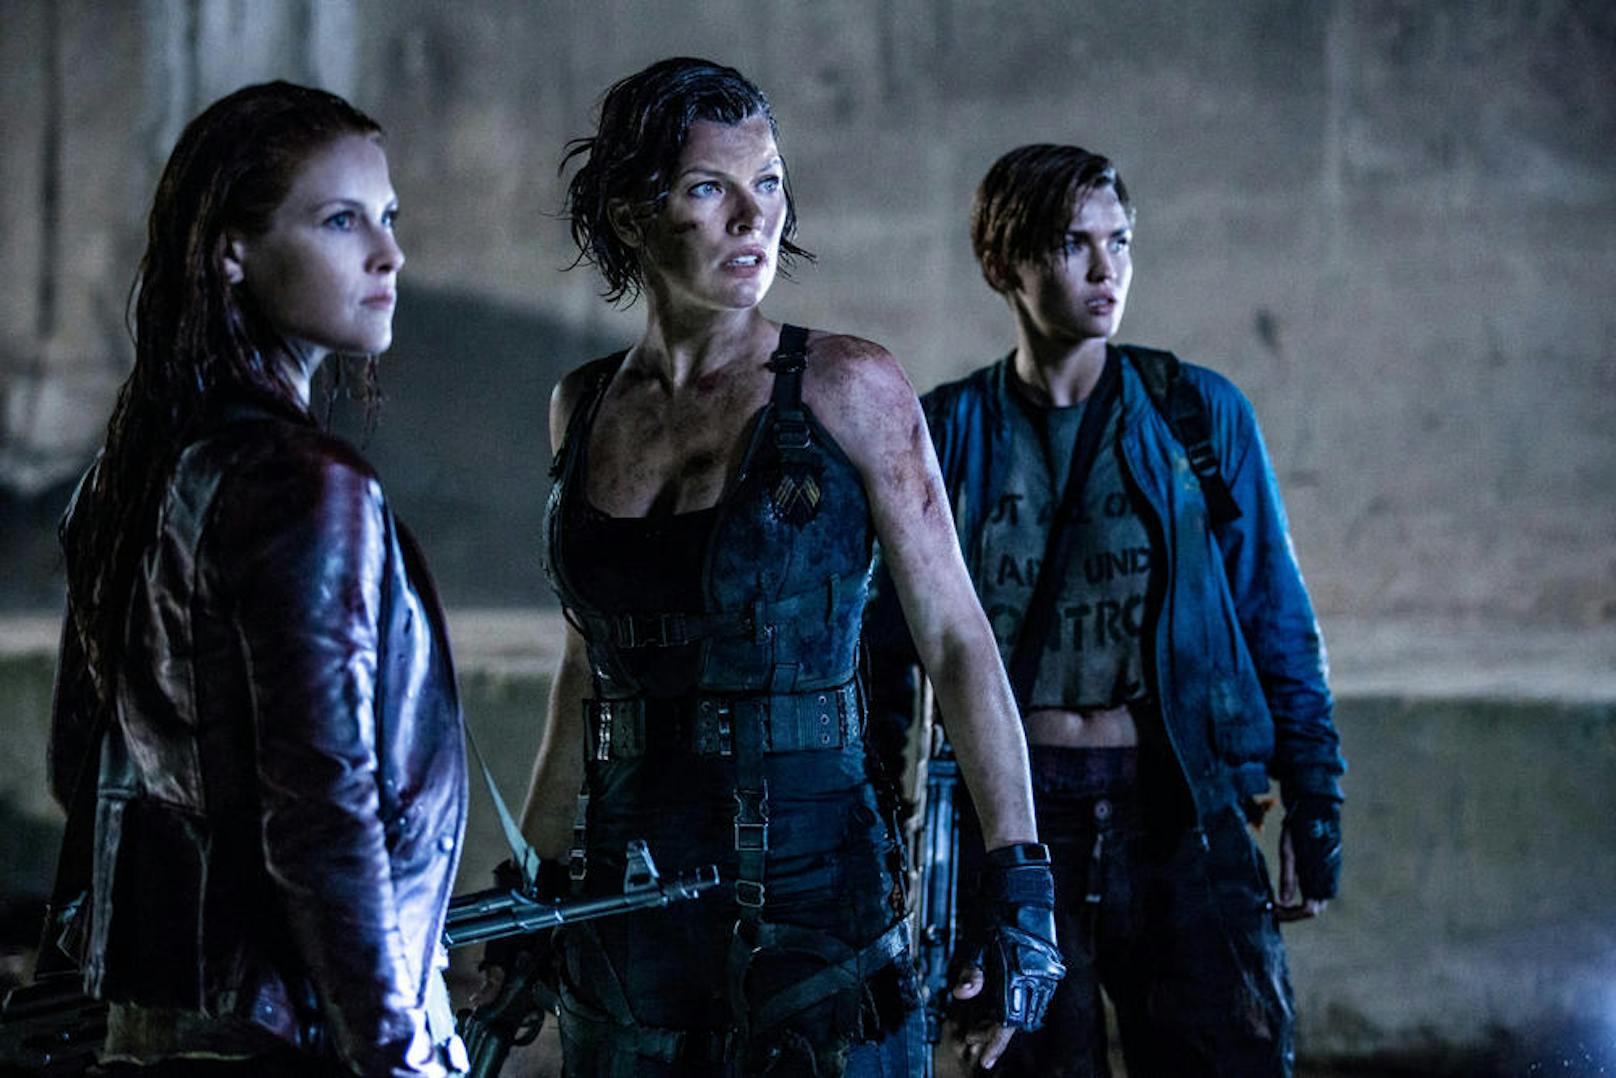 Von links: Ali Larter, Milla Jovovich und Ruby Rose in "Resident Evil - The Final Chapter"